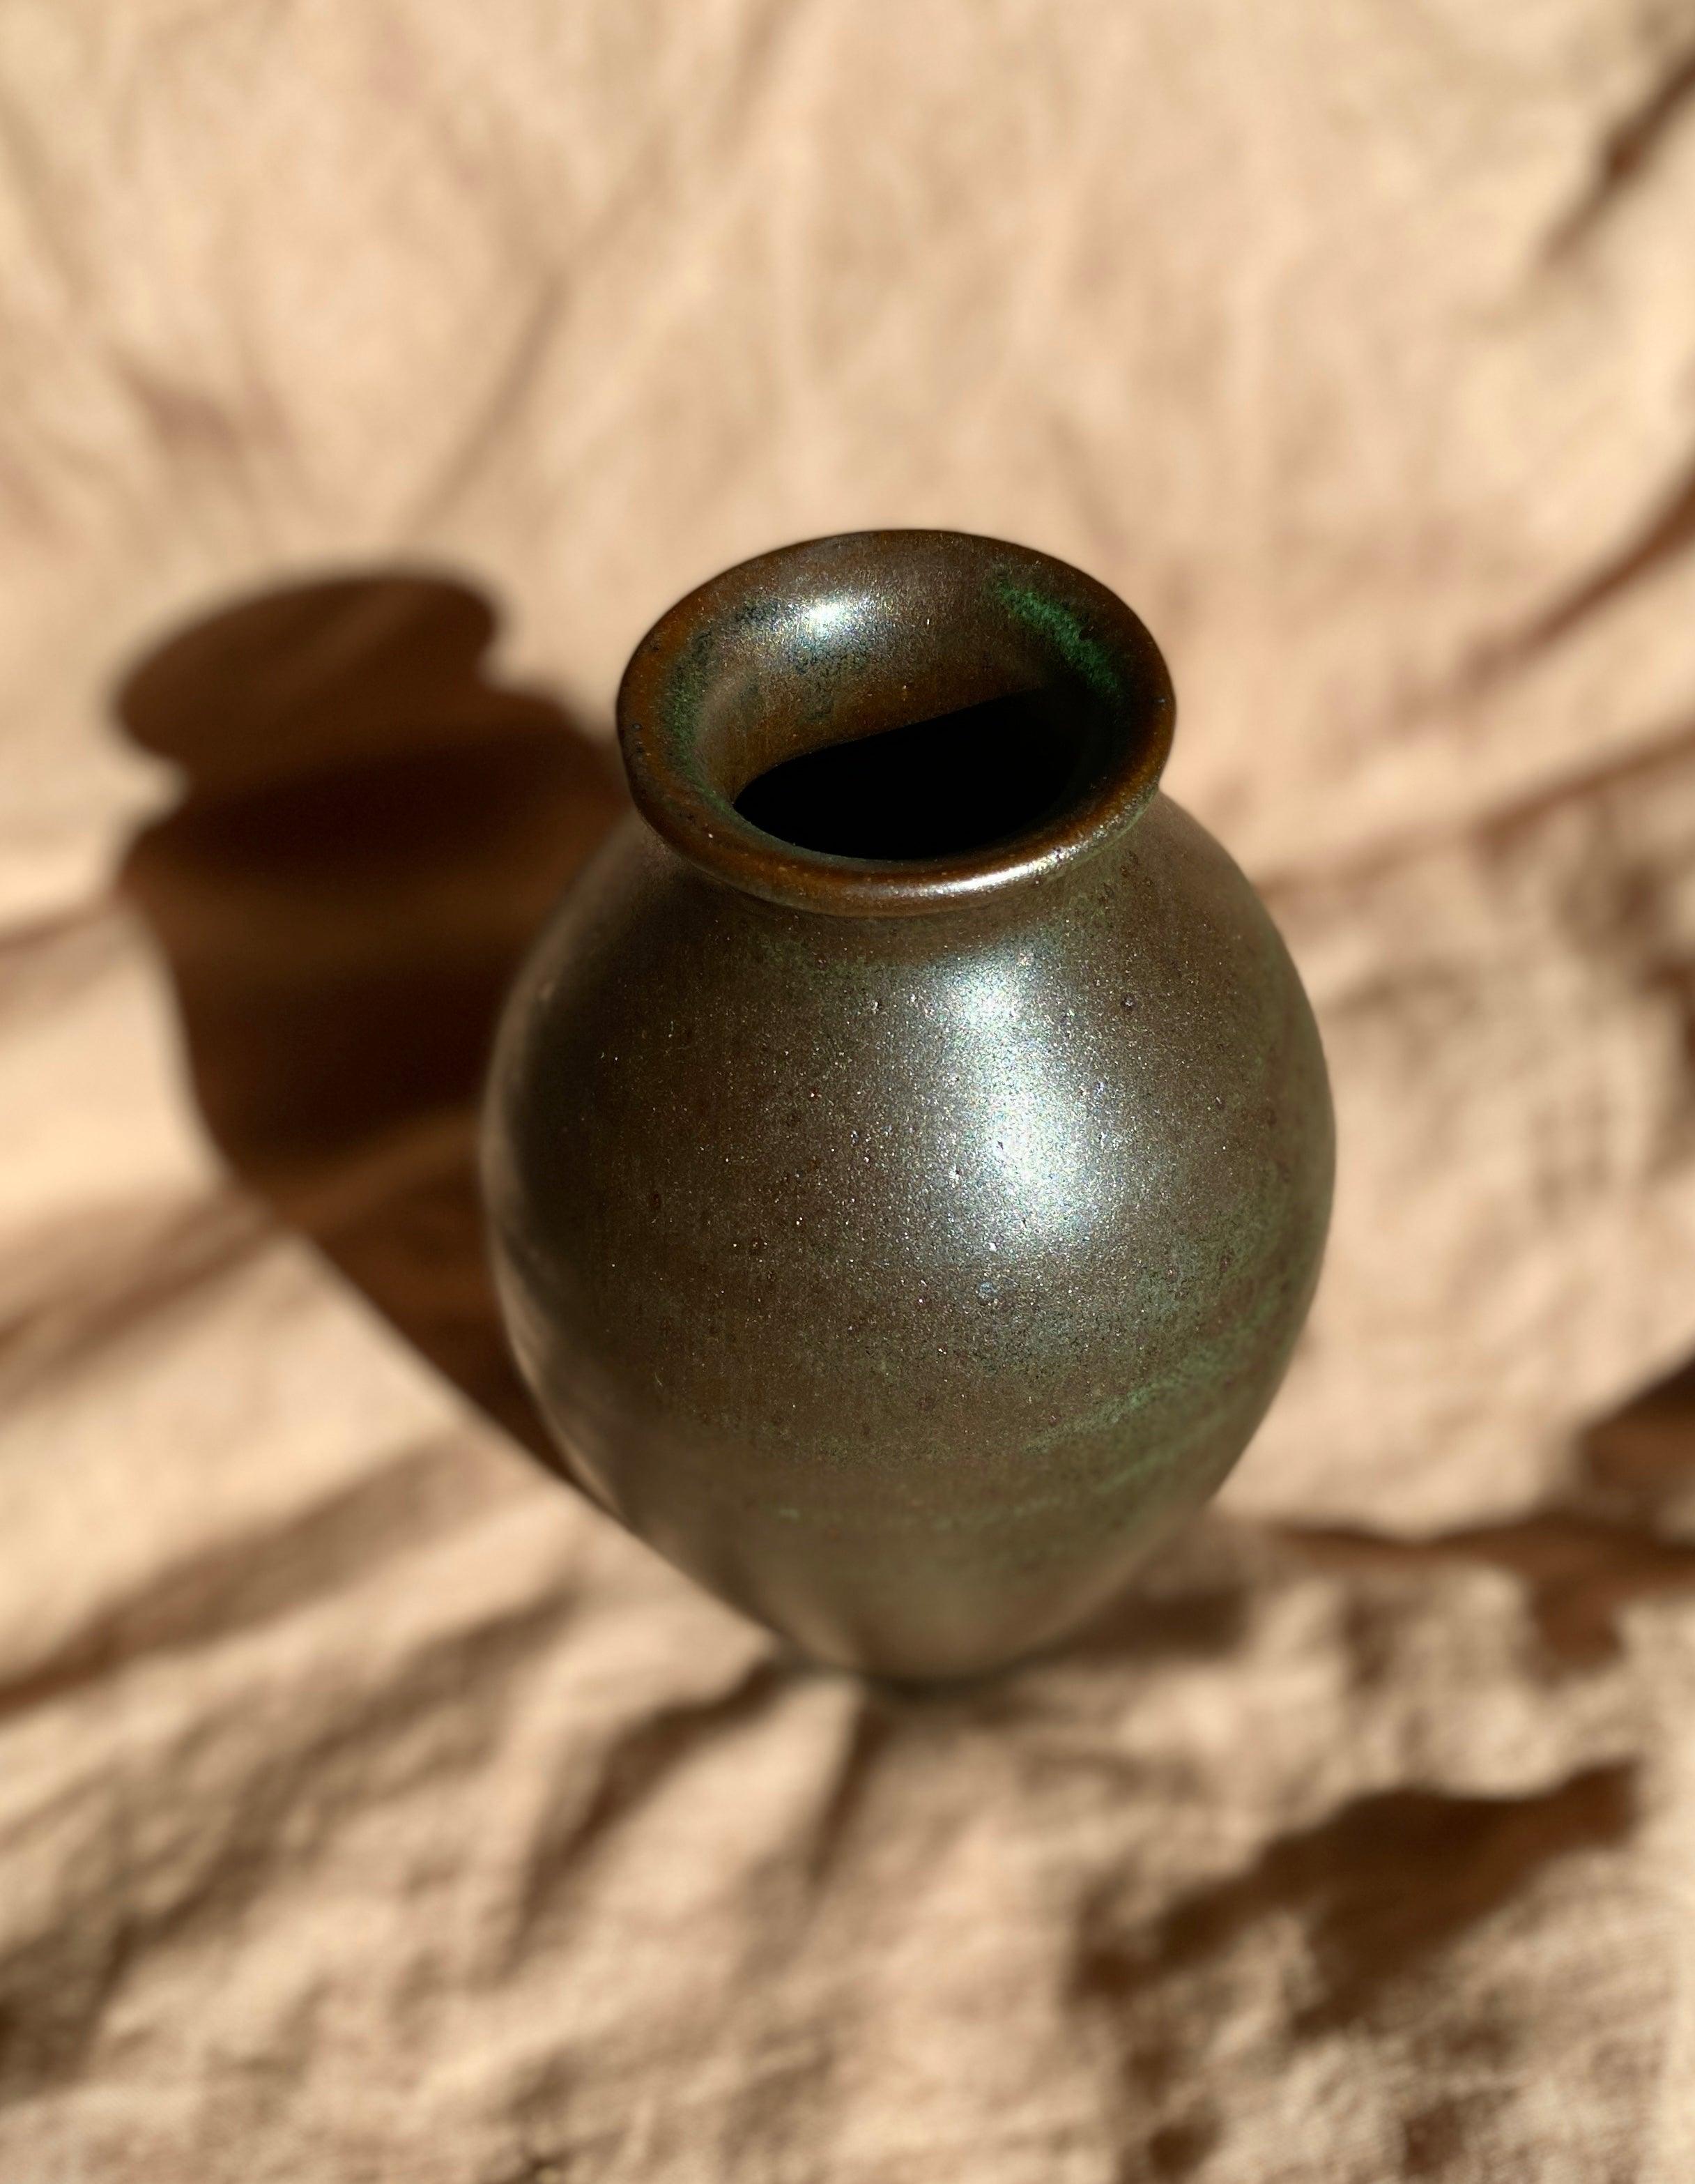 Bronze vase with green highlights - Dana Chieco Studio